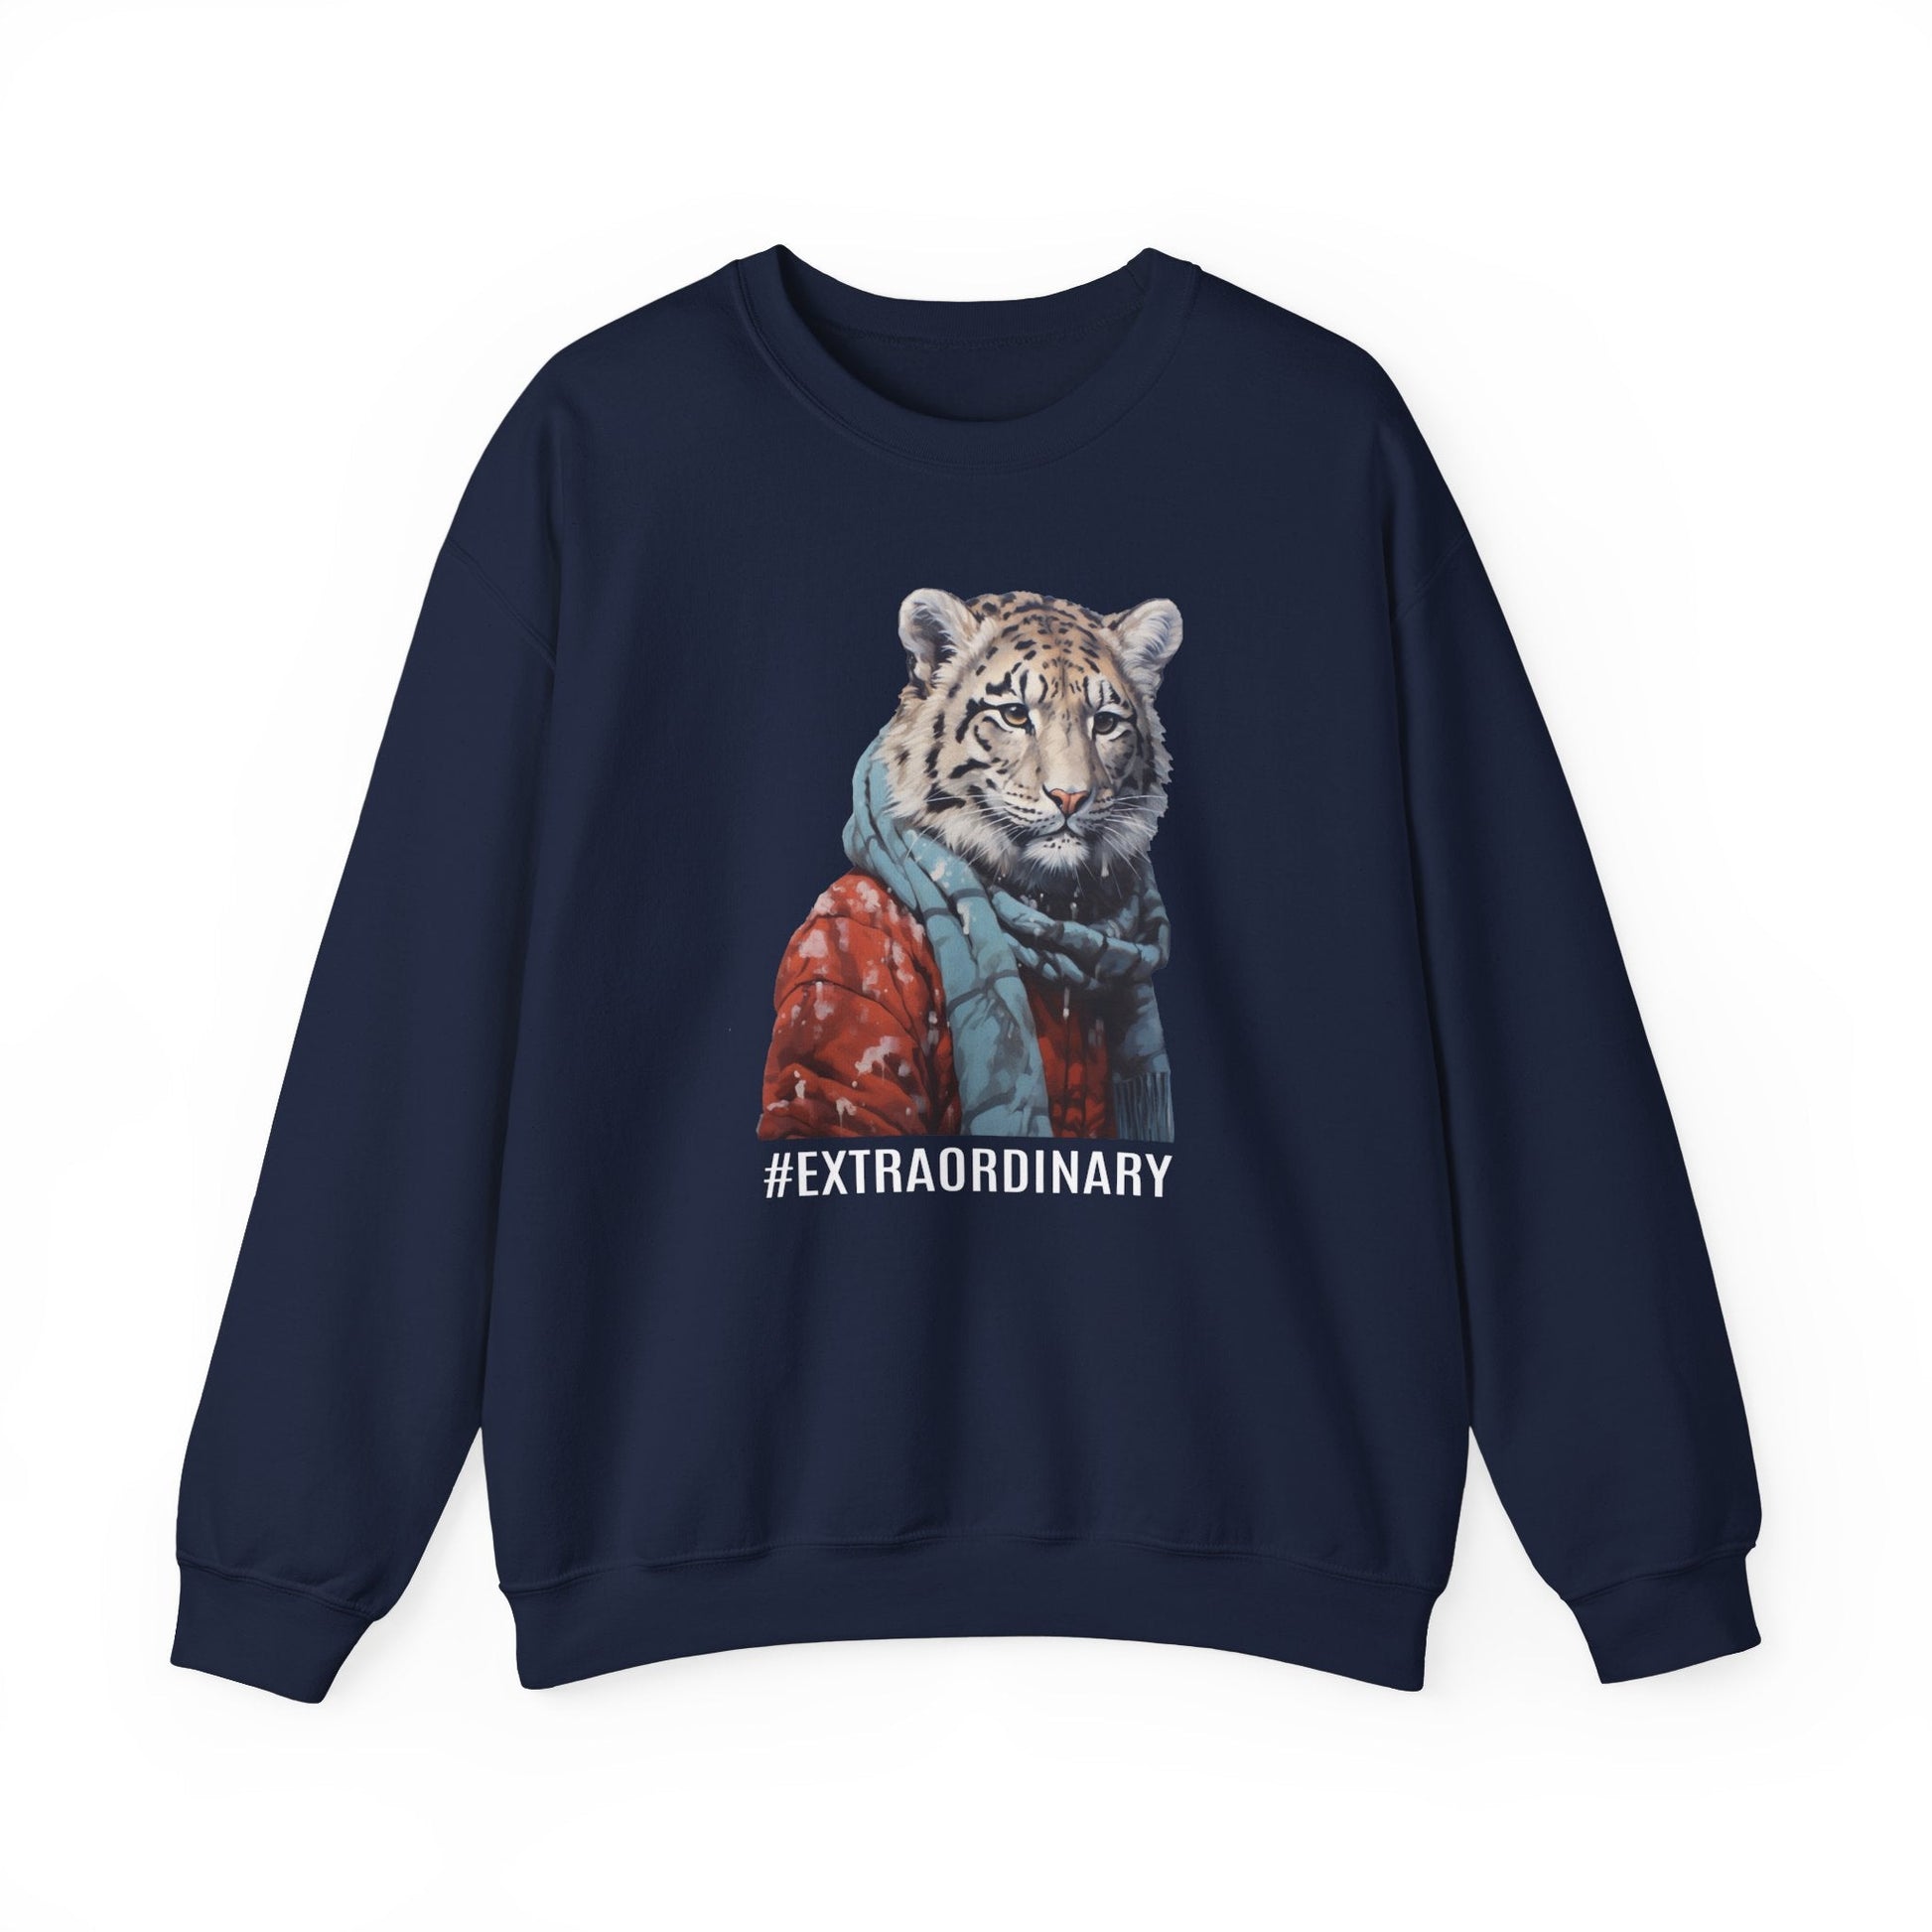 Cute Tiger Sweatshirt, #EXTRAORDINARY Sweater, Mens Shirt, Whimsical Tiger Shirt - FlooredByArt